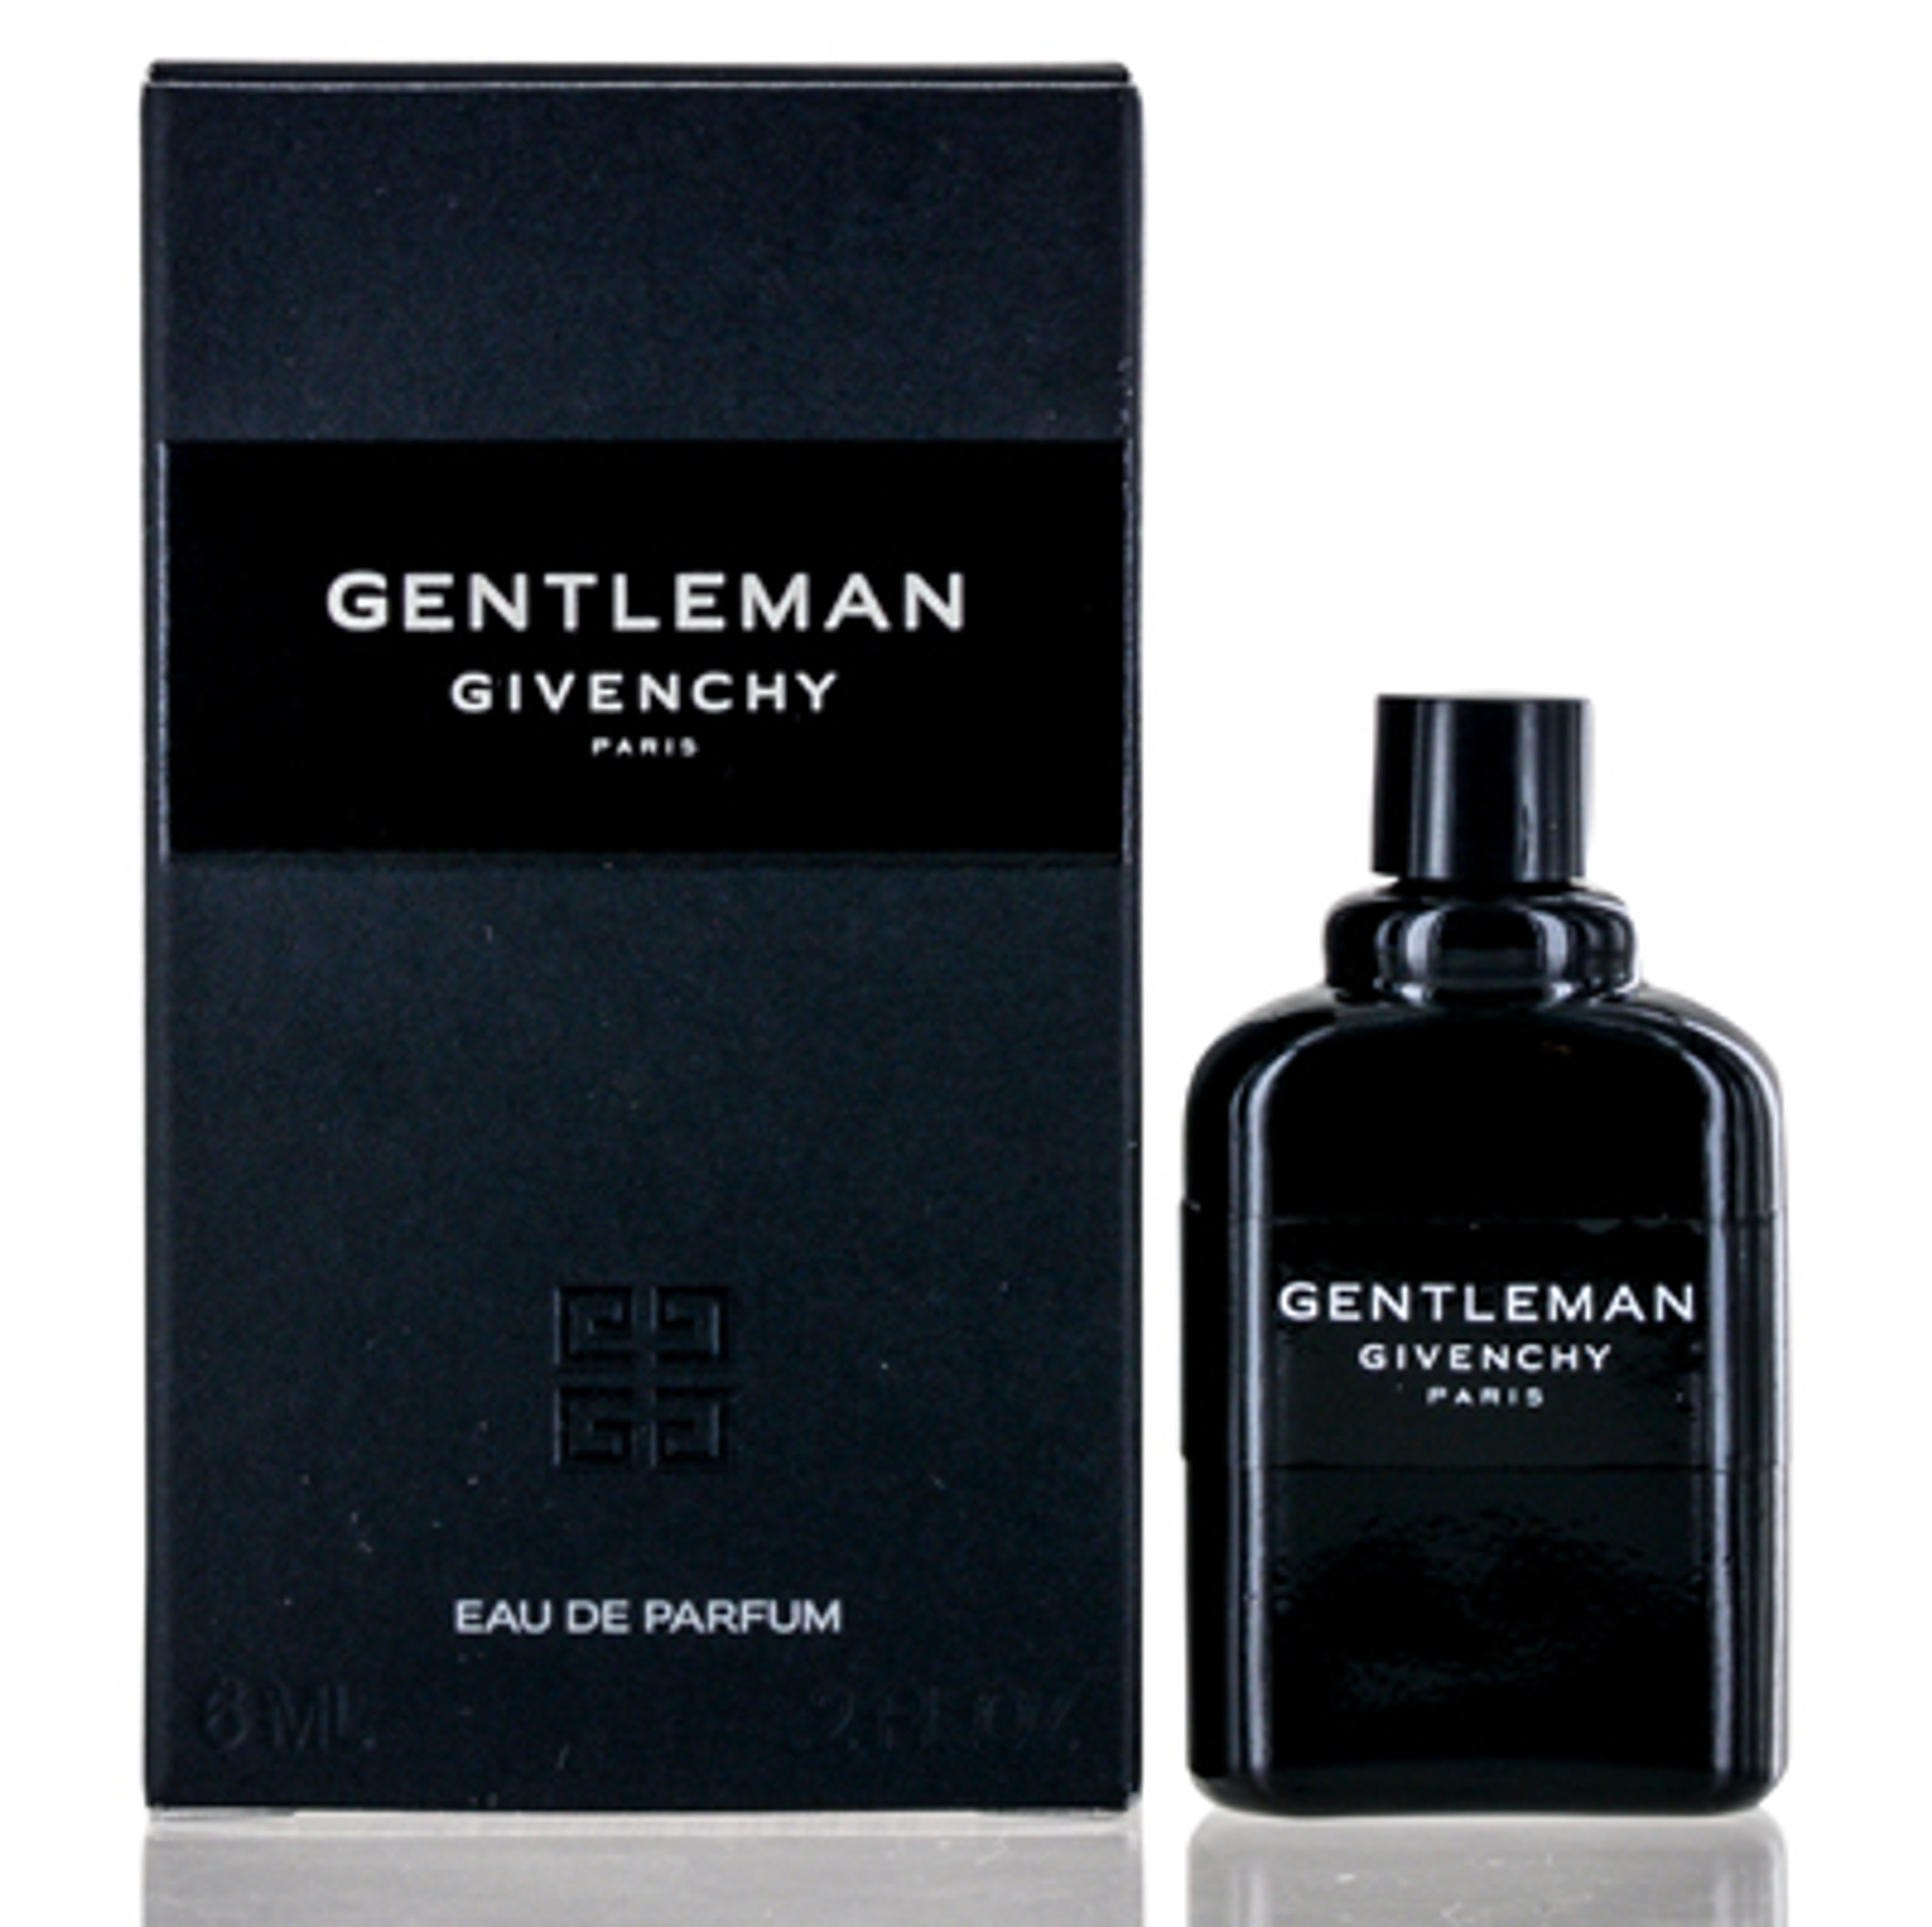  GENTLEMAN Men MINI SAMPLE Perfume (MINI/SMALL) Splash EDT  Travel Size (NEW WITHOUT BOX) - 6 ML / 0.2 fl oz : Beauty & Personal Care